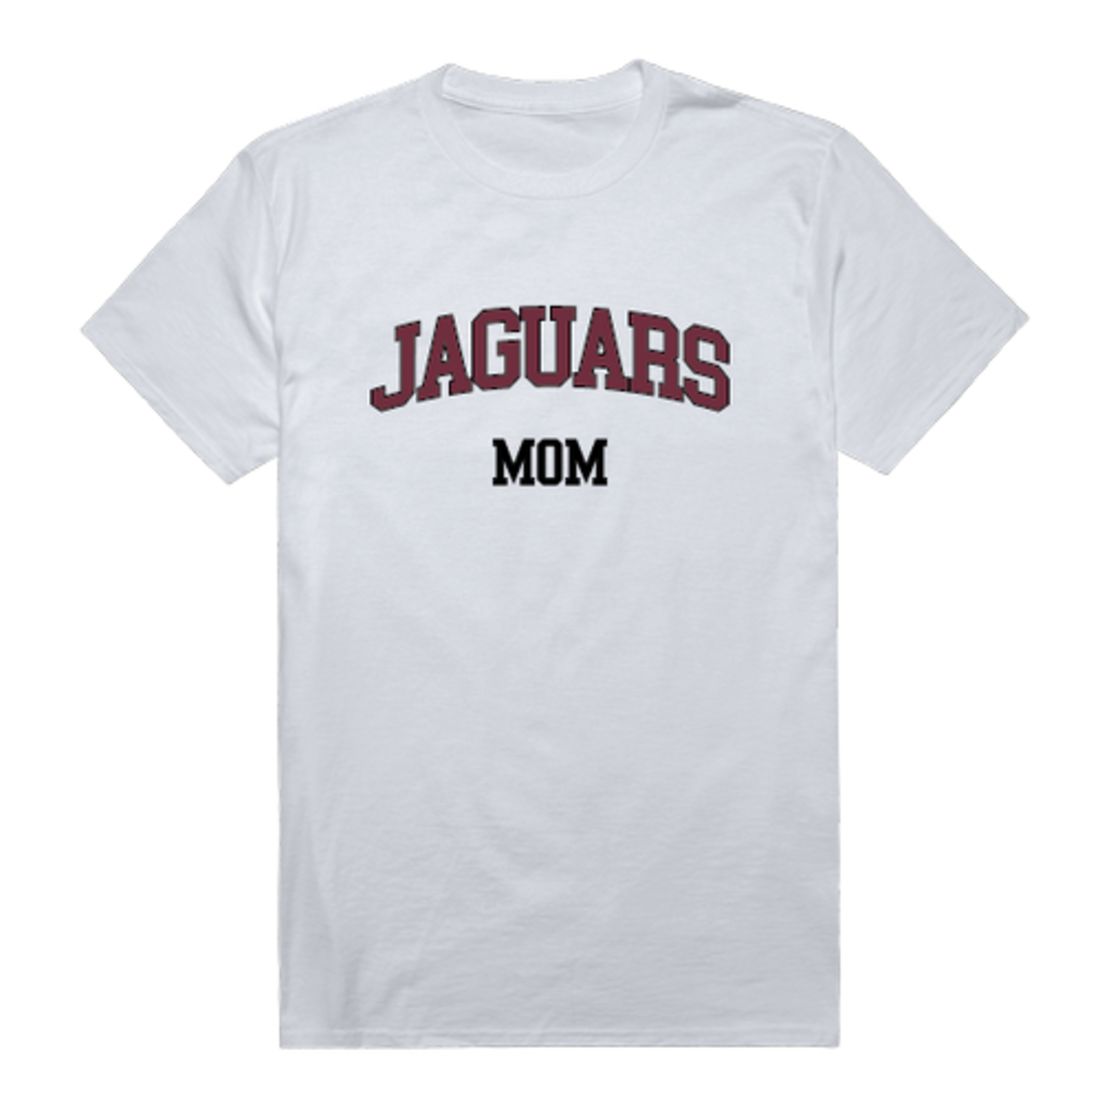 Texas A&M University-San Antonio Jaguars Mom T-Shirt